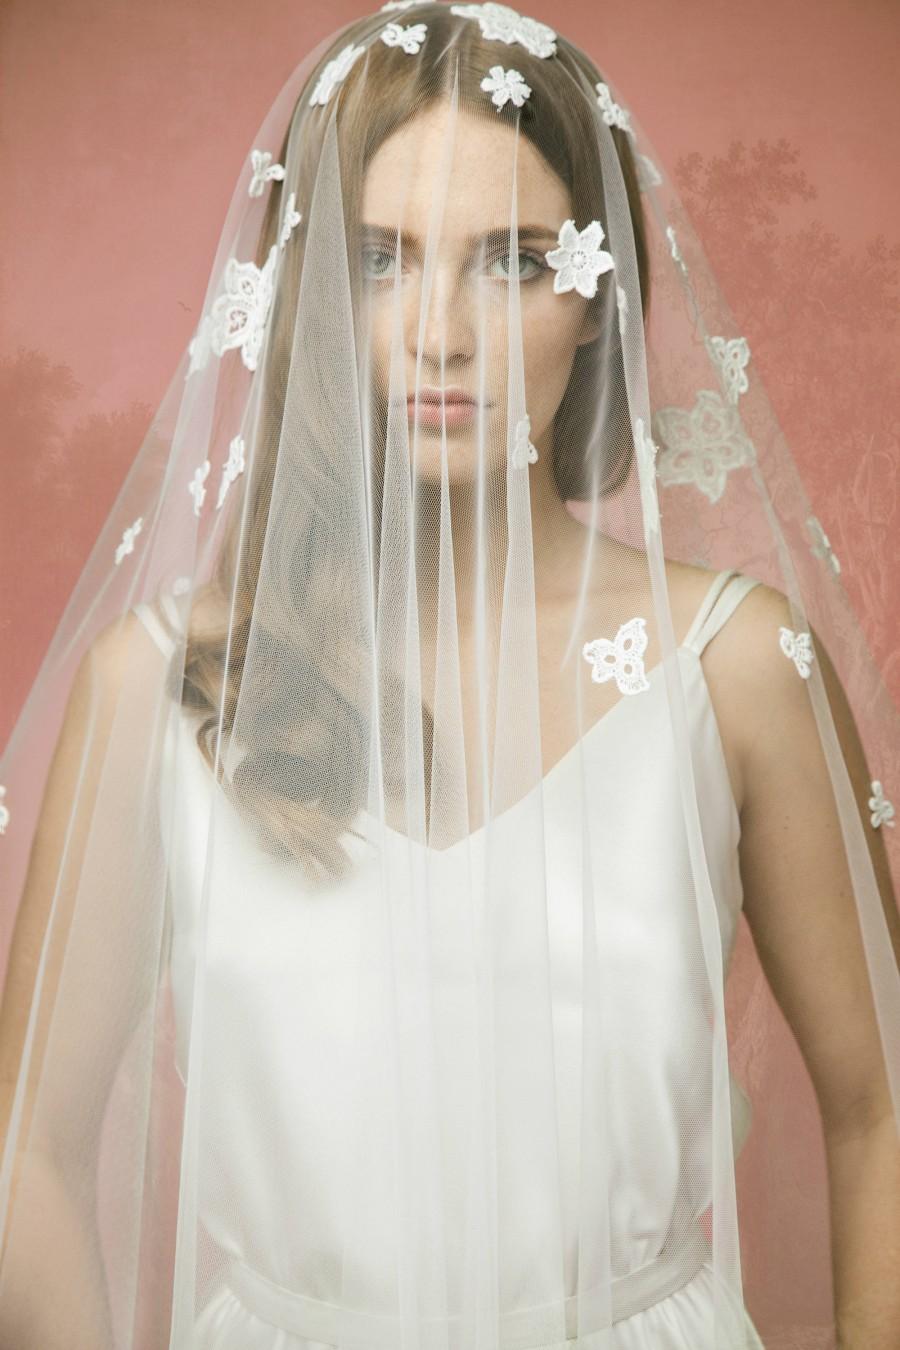 Wedding - Lace Bridal Veil A10, Lace Wedding Veil, Lace Applique Veil,Cotton Lace Veil, Tulle Lace Veil, Double Layer Veil, Cathedral Veil, Chapel